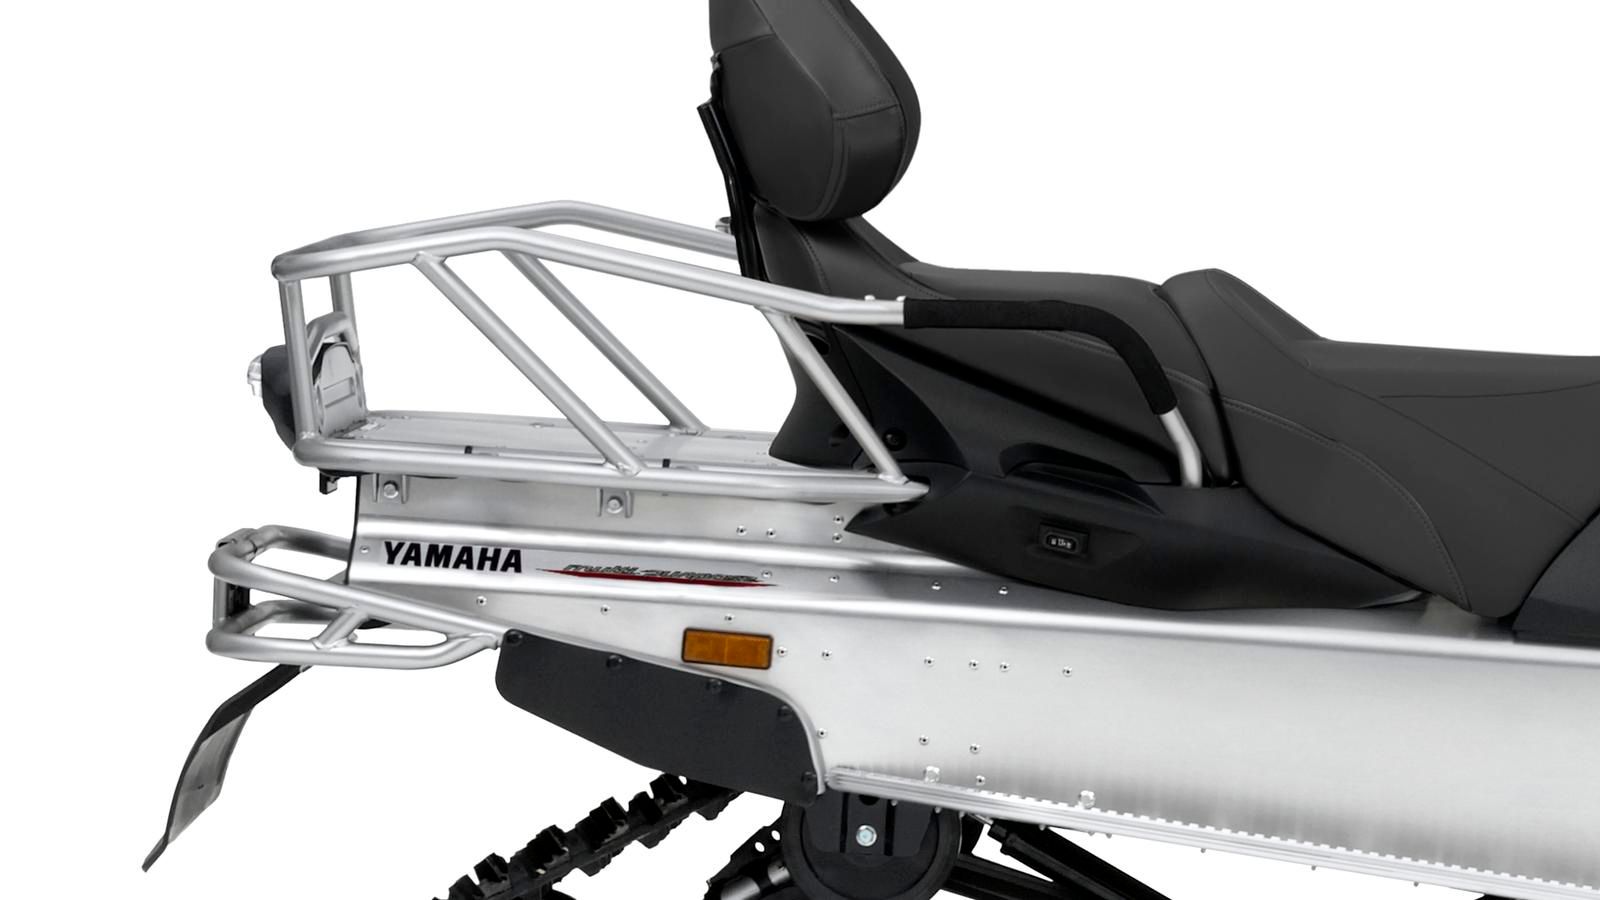 2013 Yamaha Venture Multi Purpose